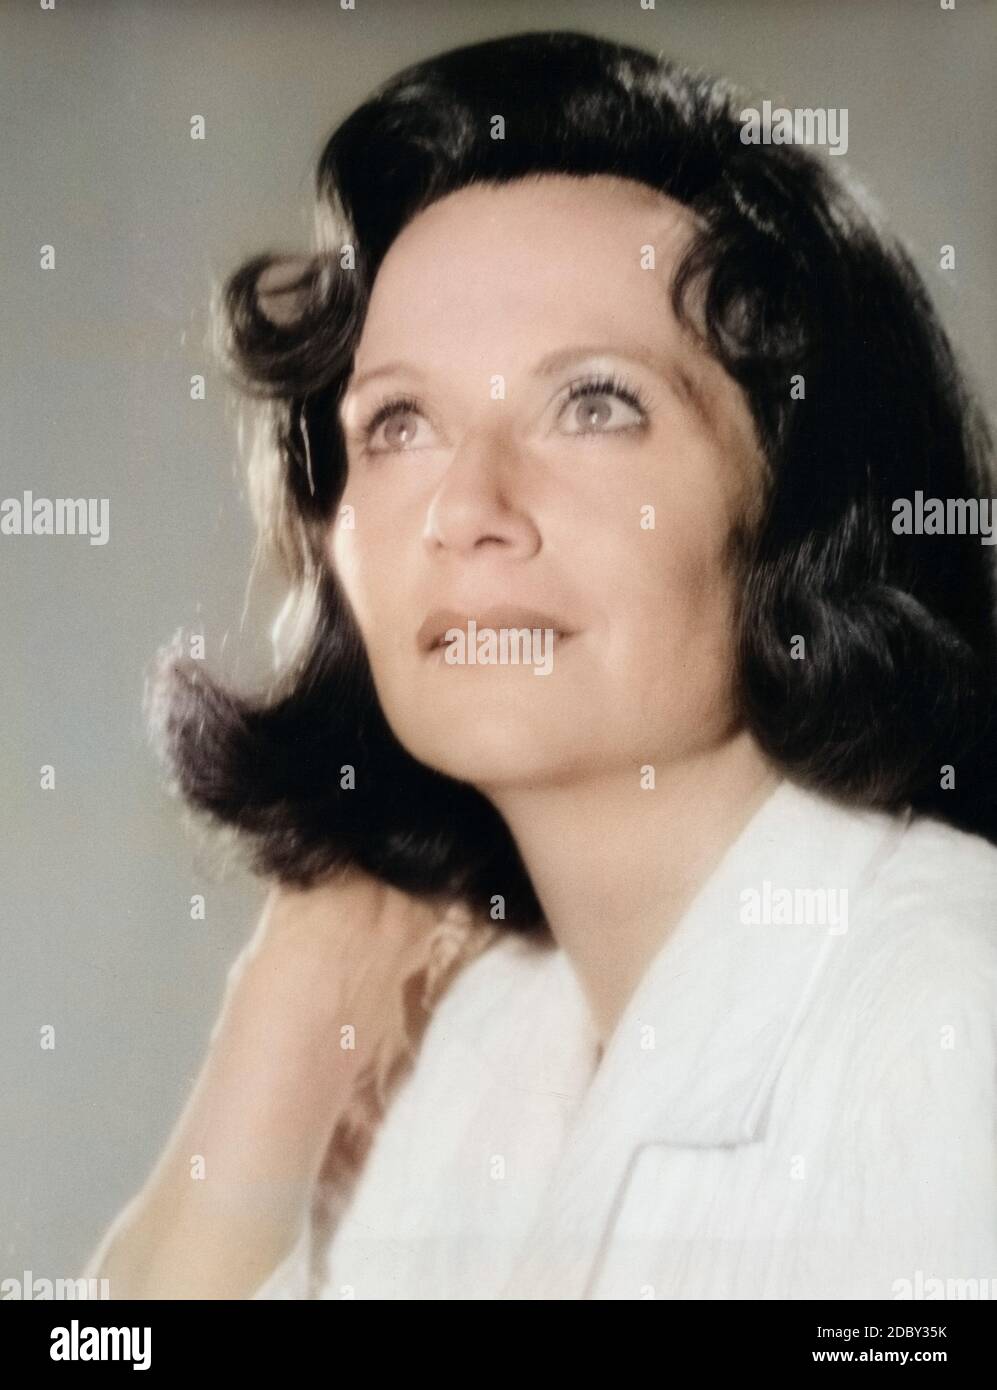 Gisela Fackeldey, deutsche Plant, Deutschland um 1966. Die deutsche Schauspielerin Gisela Fackeldey, Deutschland Ca. 1966. Stockfoto